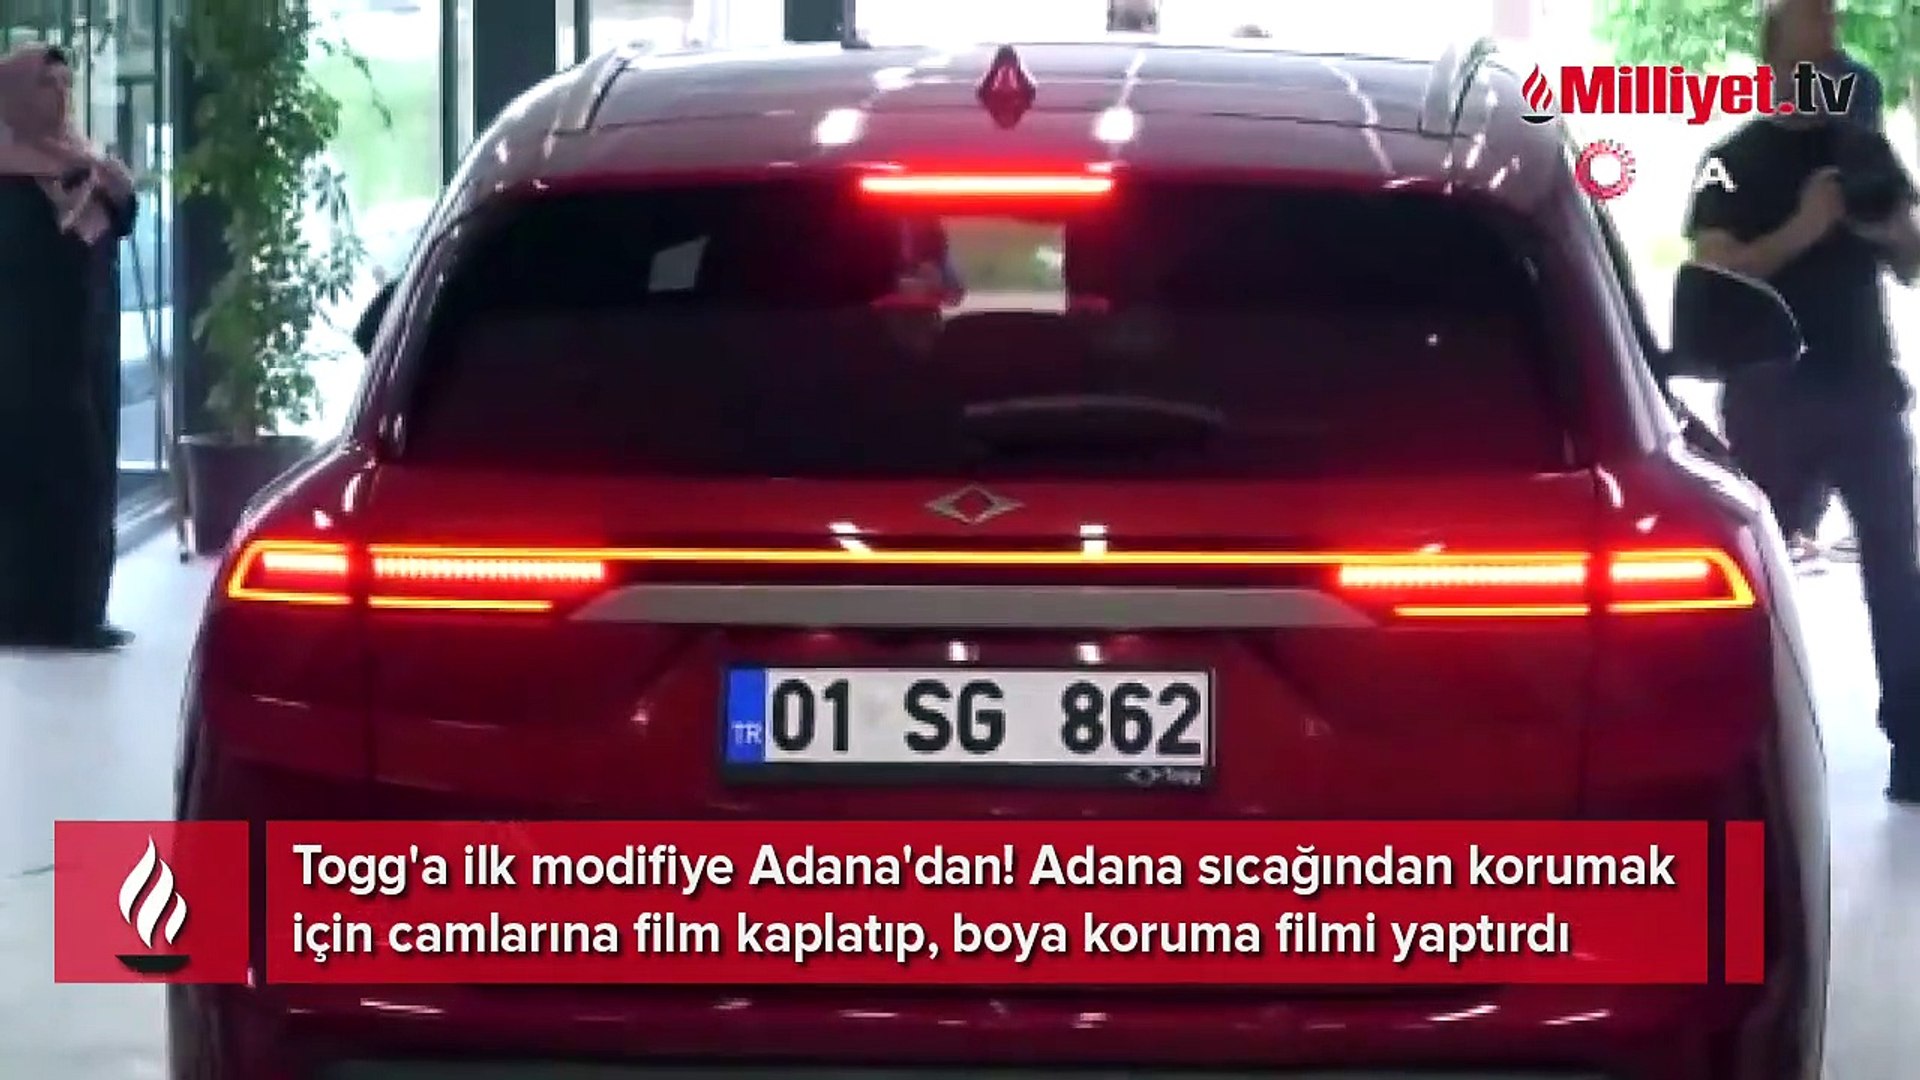 Togg'a ilk modifiye Adana'dan - Dailymotion Video